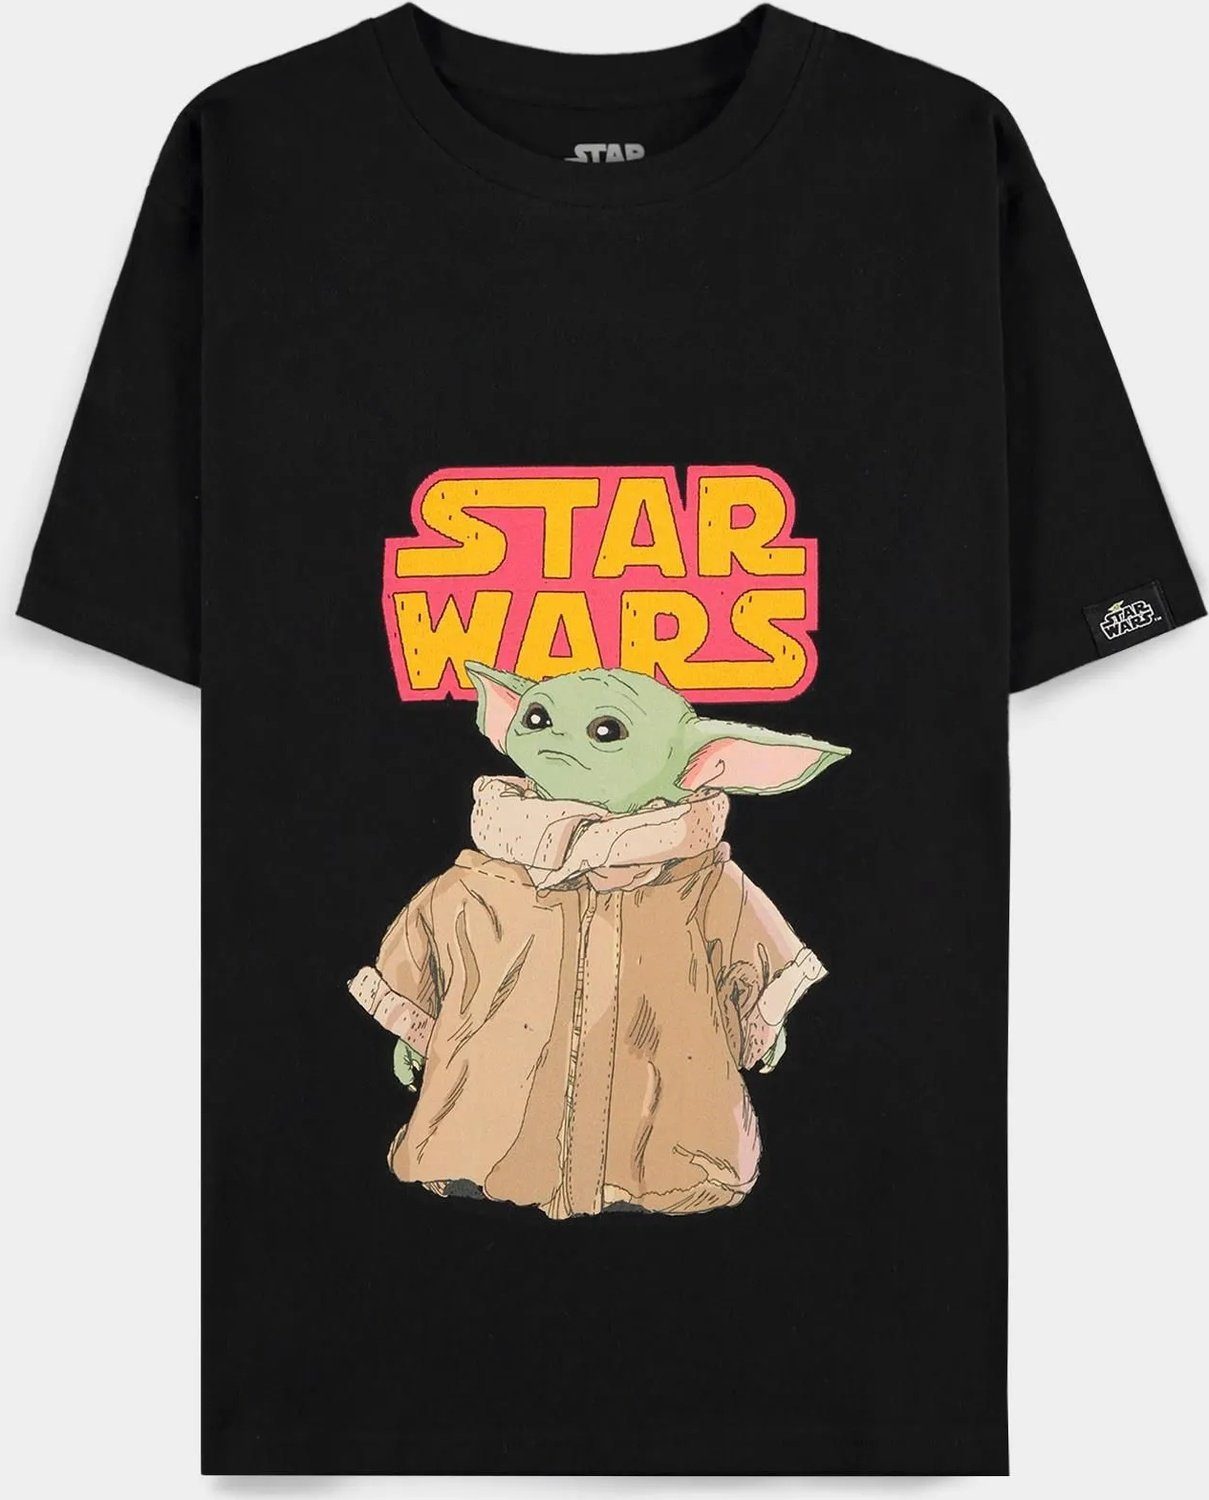 T-Shirt Wars Star